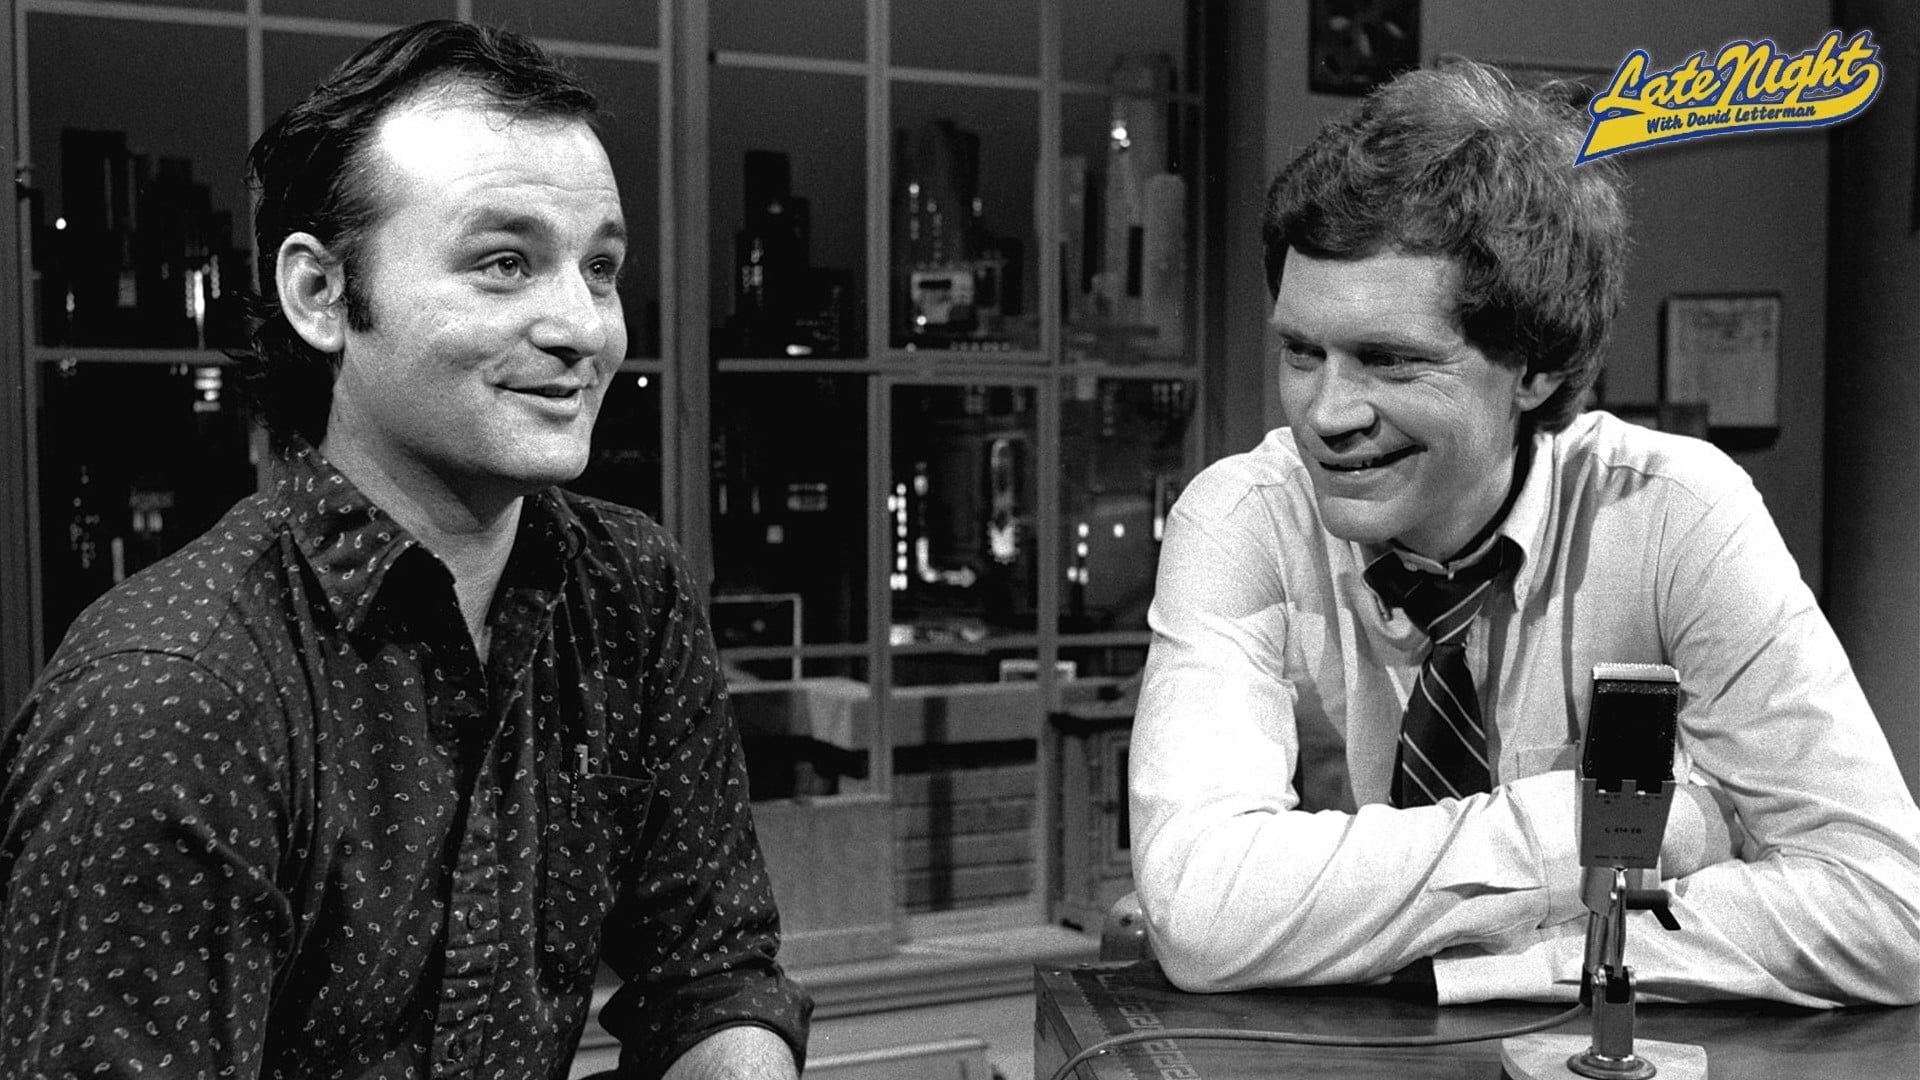 Late Night with David Letterman - Staffel 5 (1970)